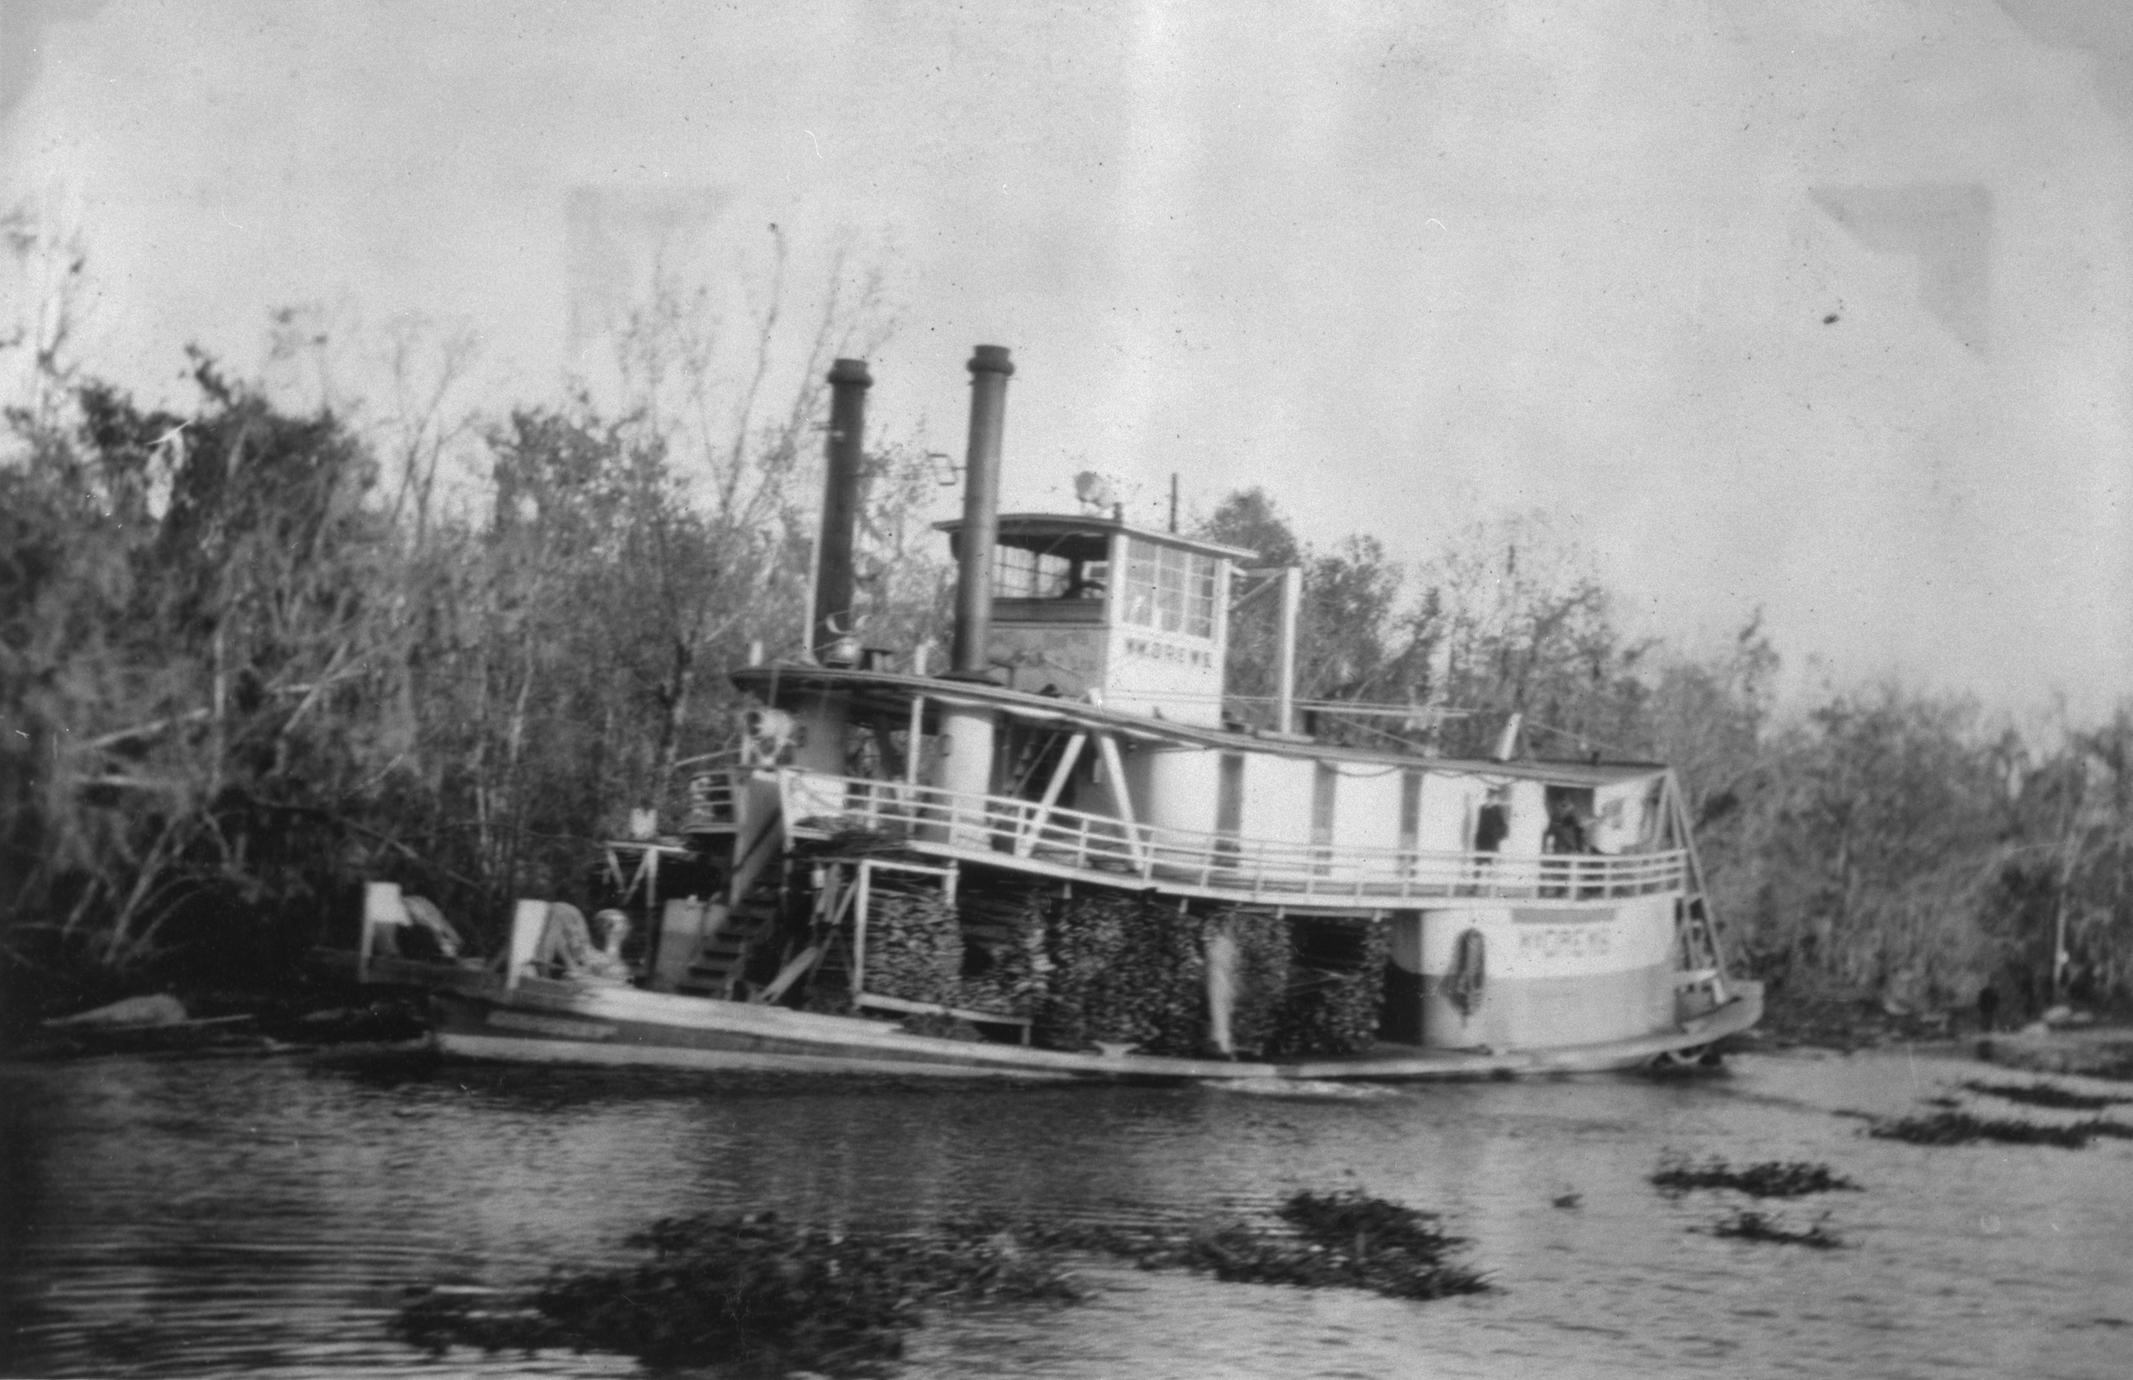 Wm. Drews (Towboat, 1901-1930?)